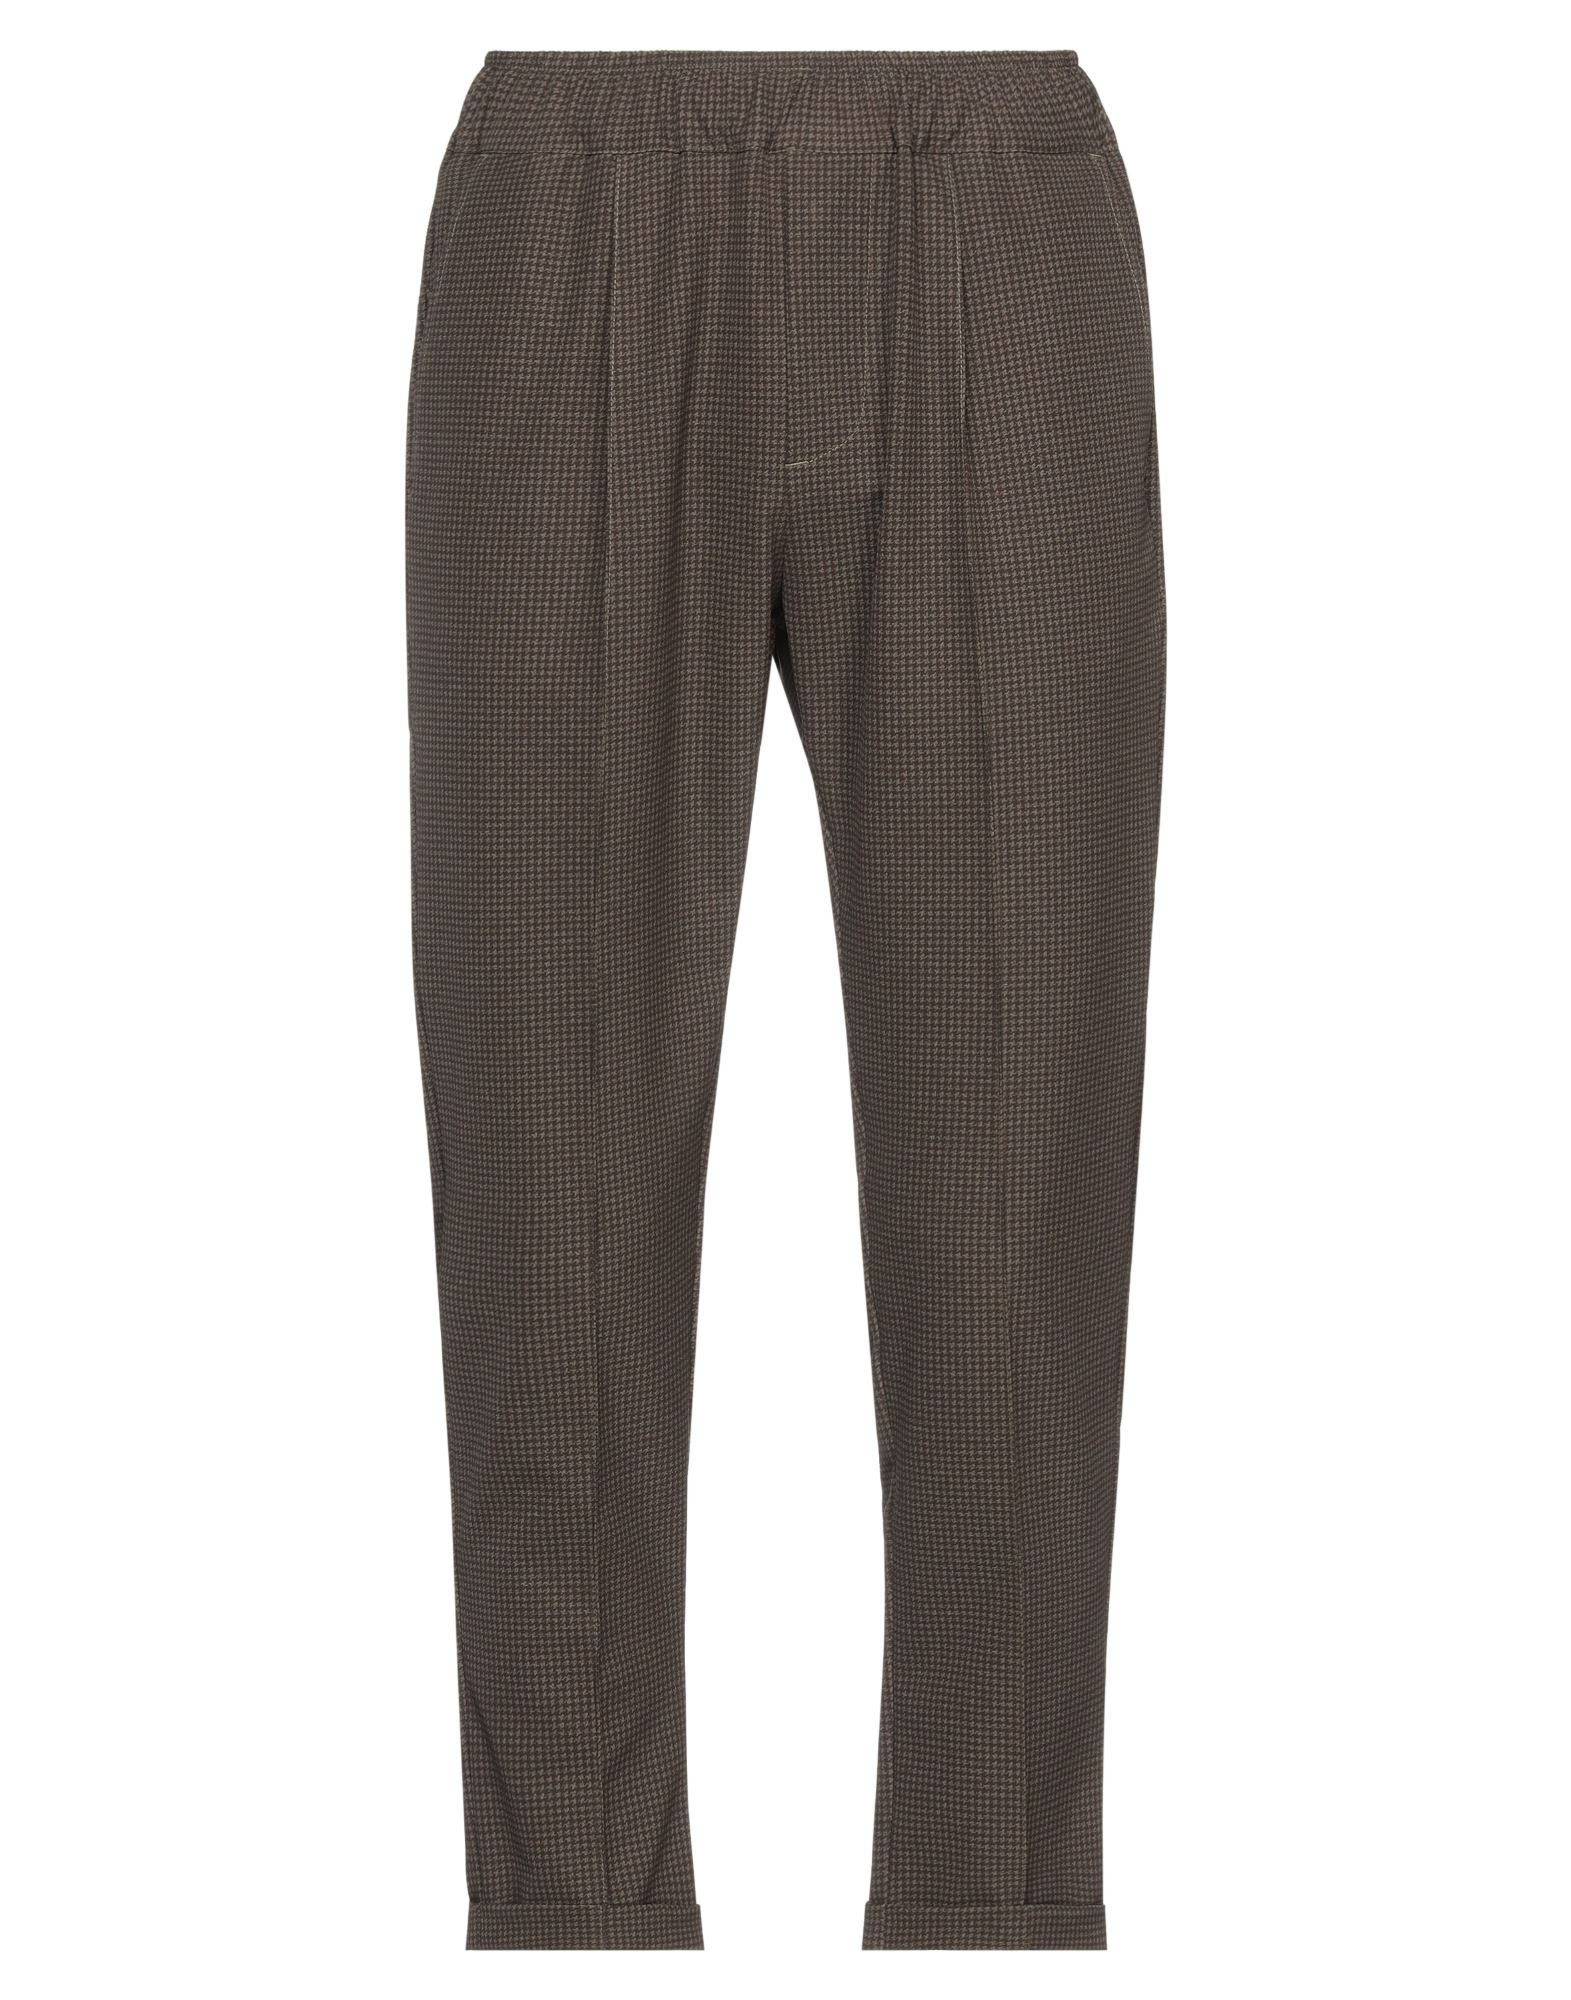 Pmds Premium Mood Denim Superior Pants In Brown